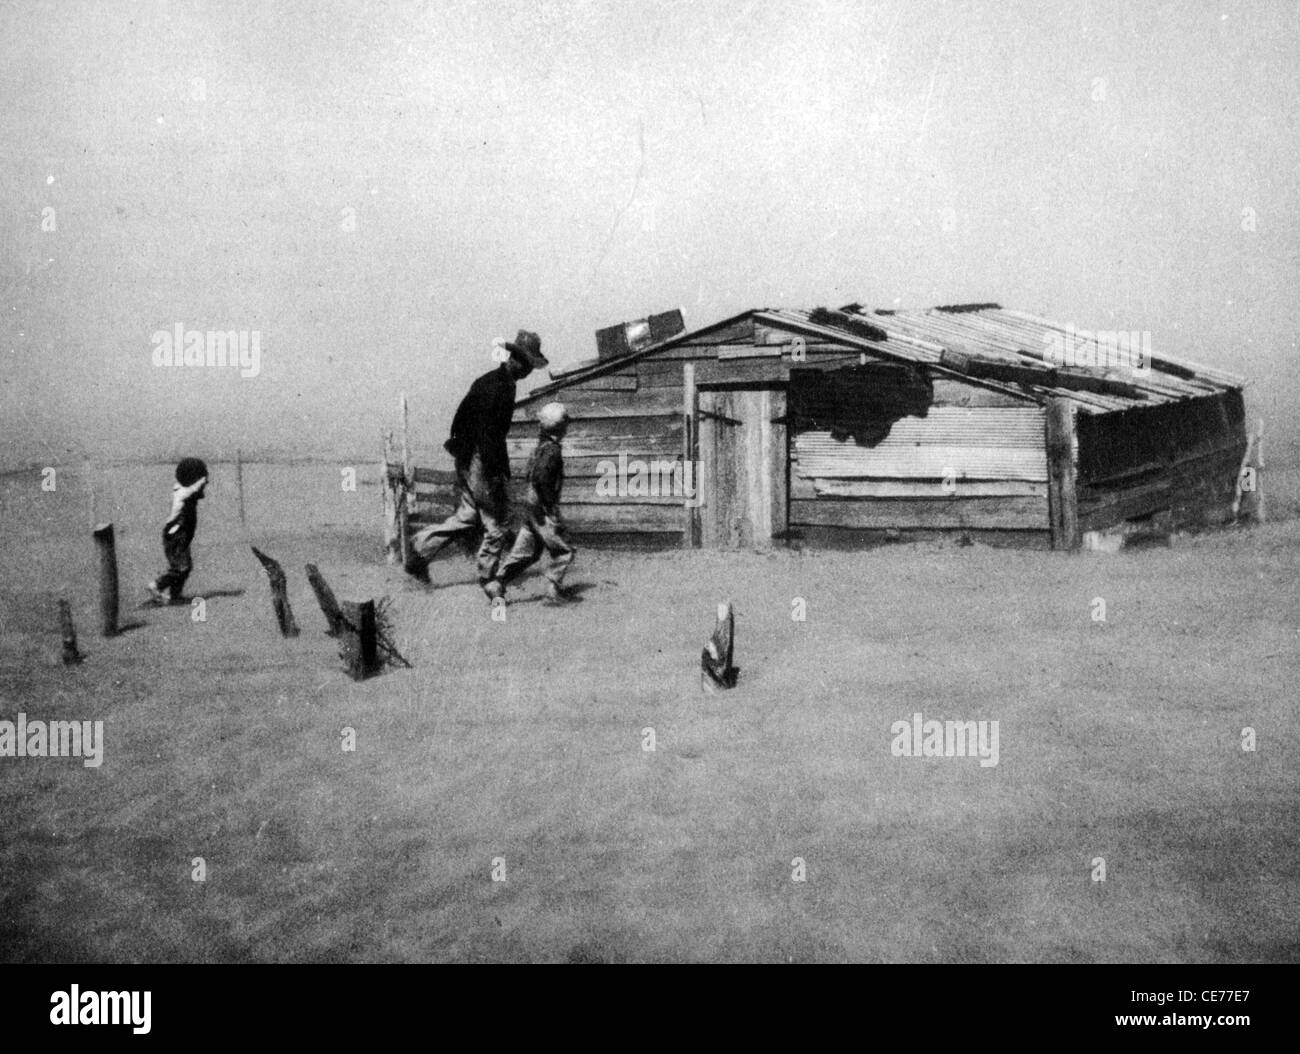 AMERICAN FARMING DEPRESSION Dustbowl conditions on farmland in Cimarron County Oklahoma, April 1936. Stock Photo